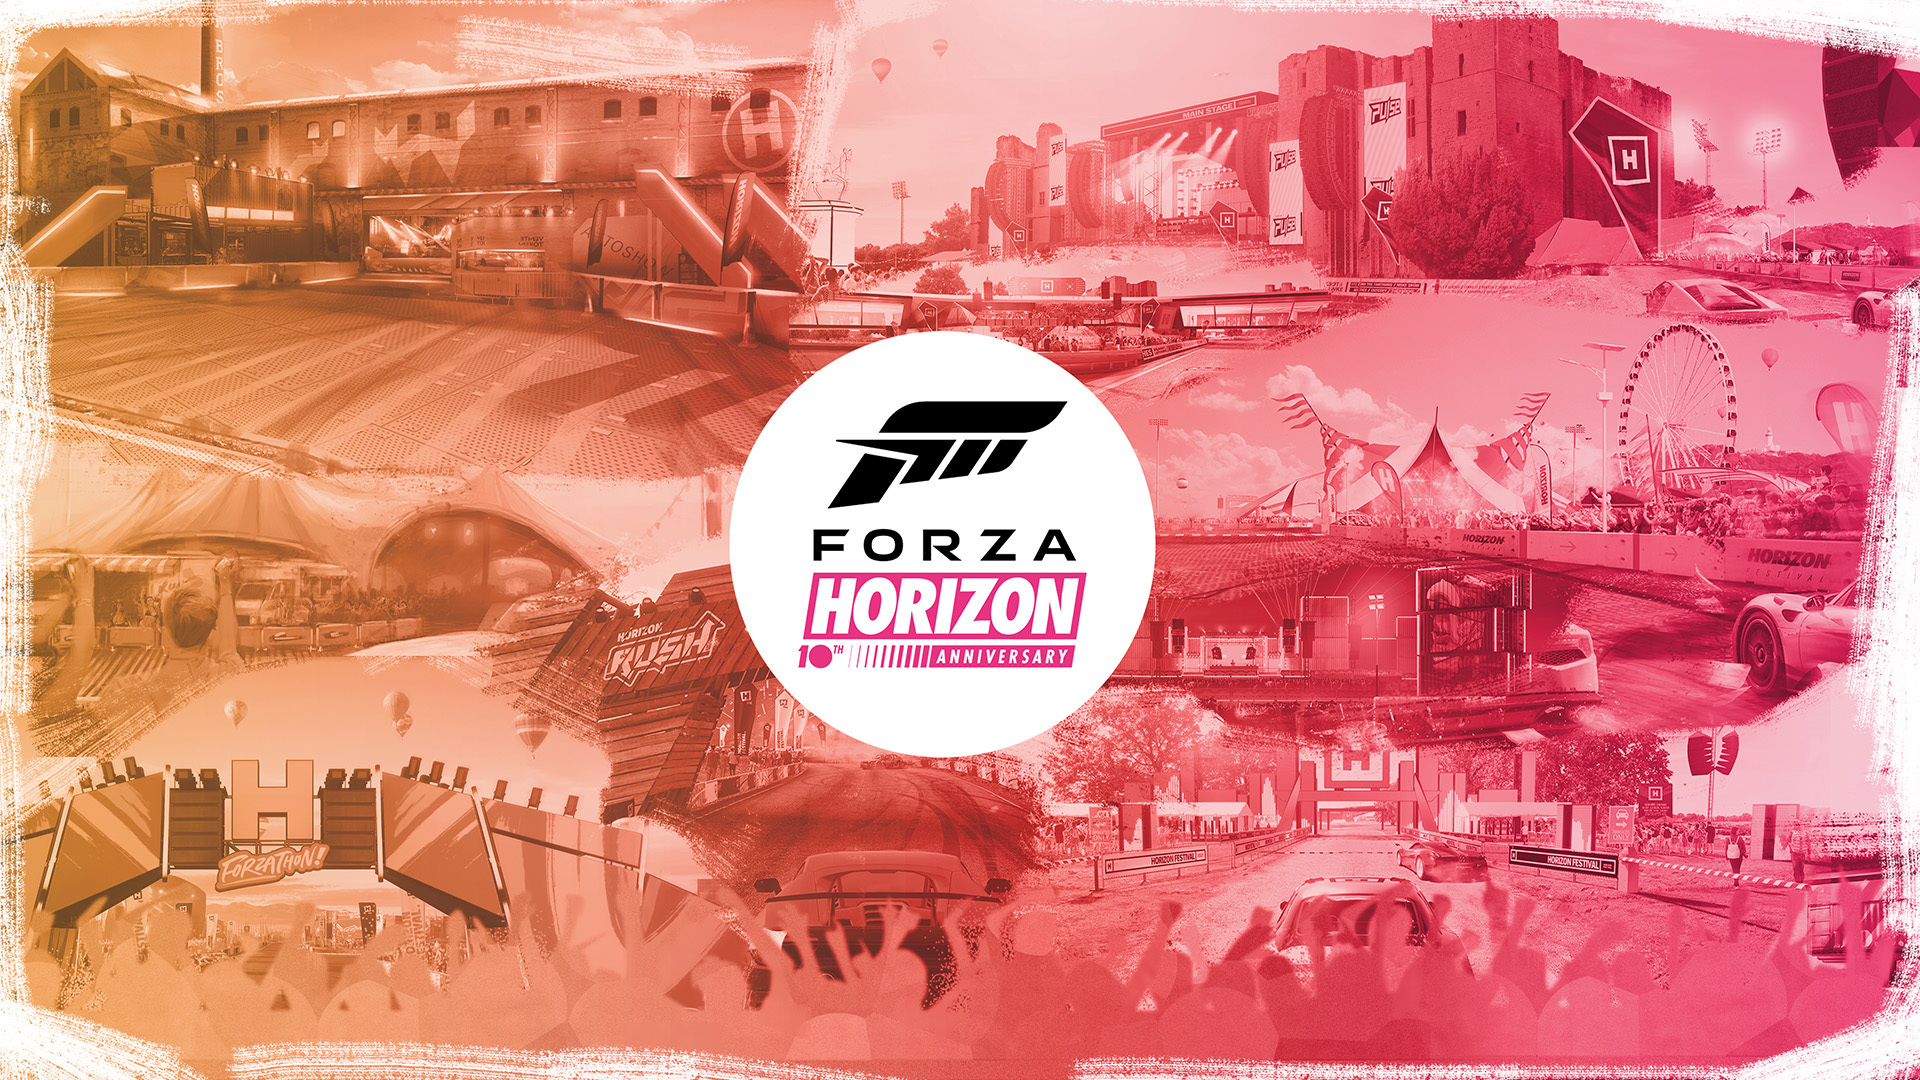 Forza Horizon 5 Midnights at Horizon is one of the best Series updates yet